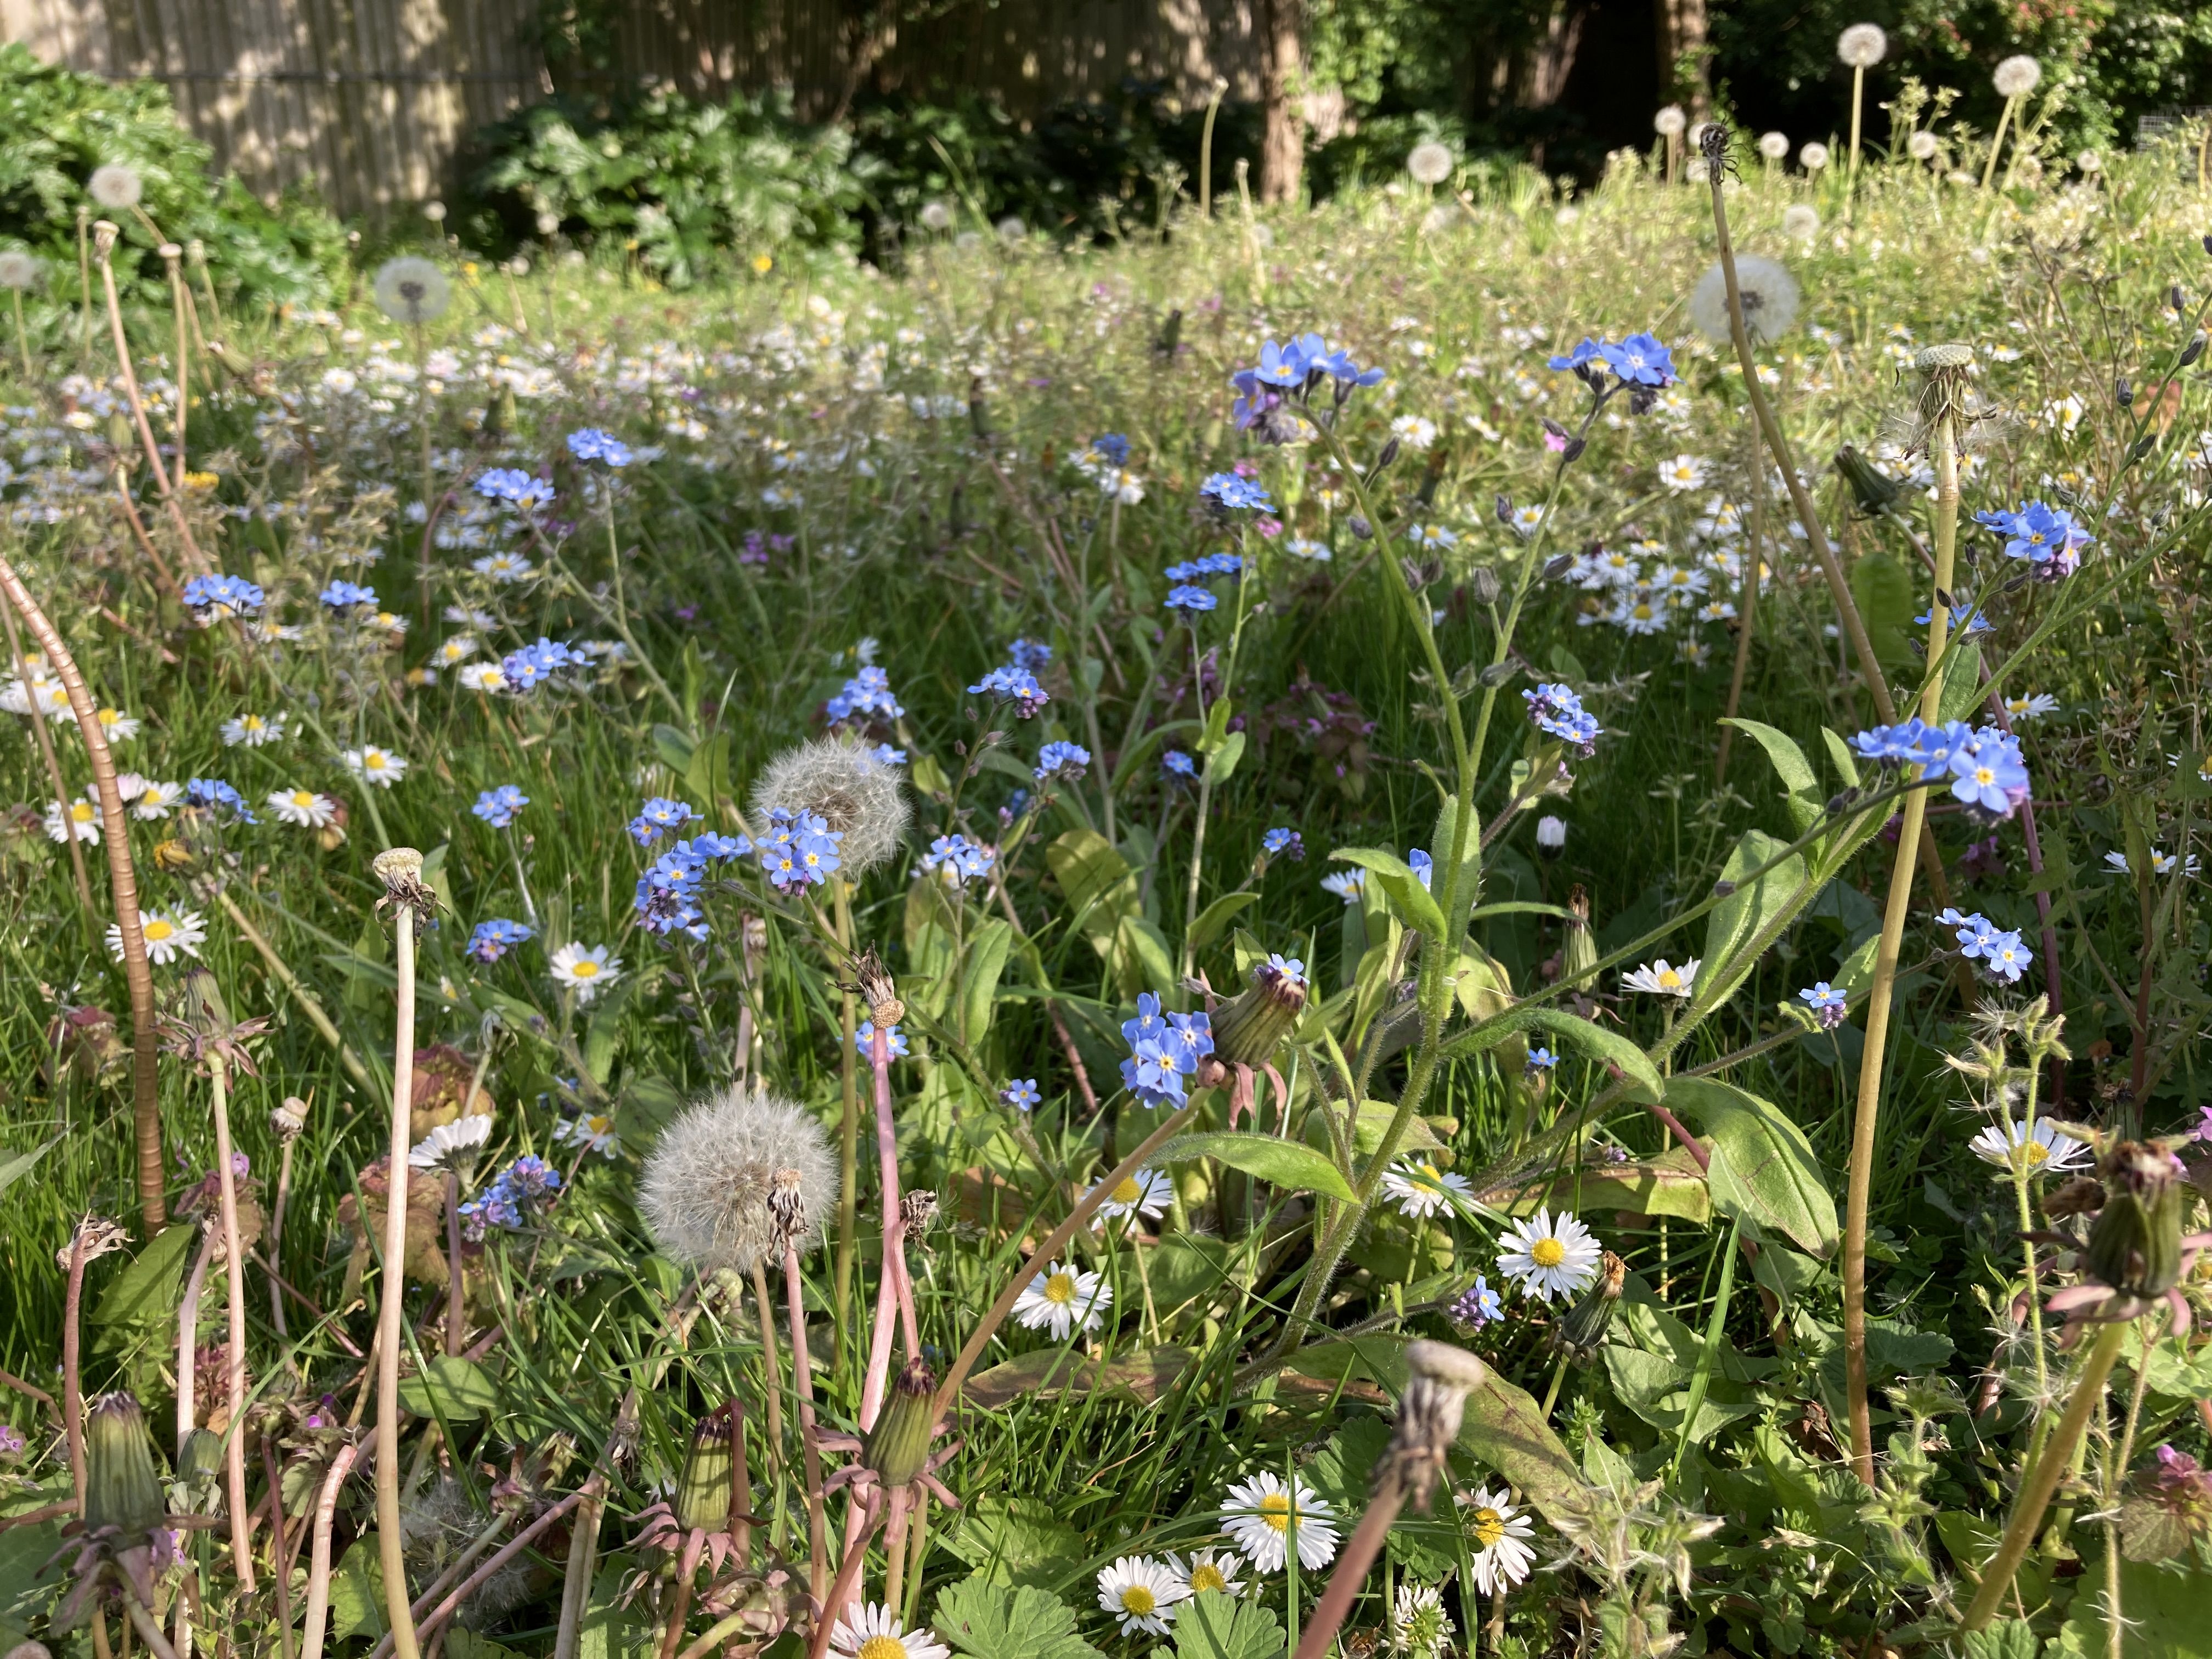 Fulham wildflowers